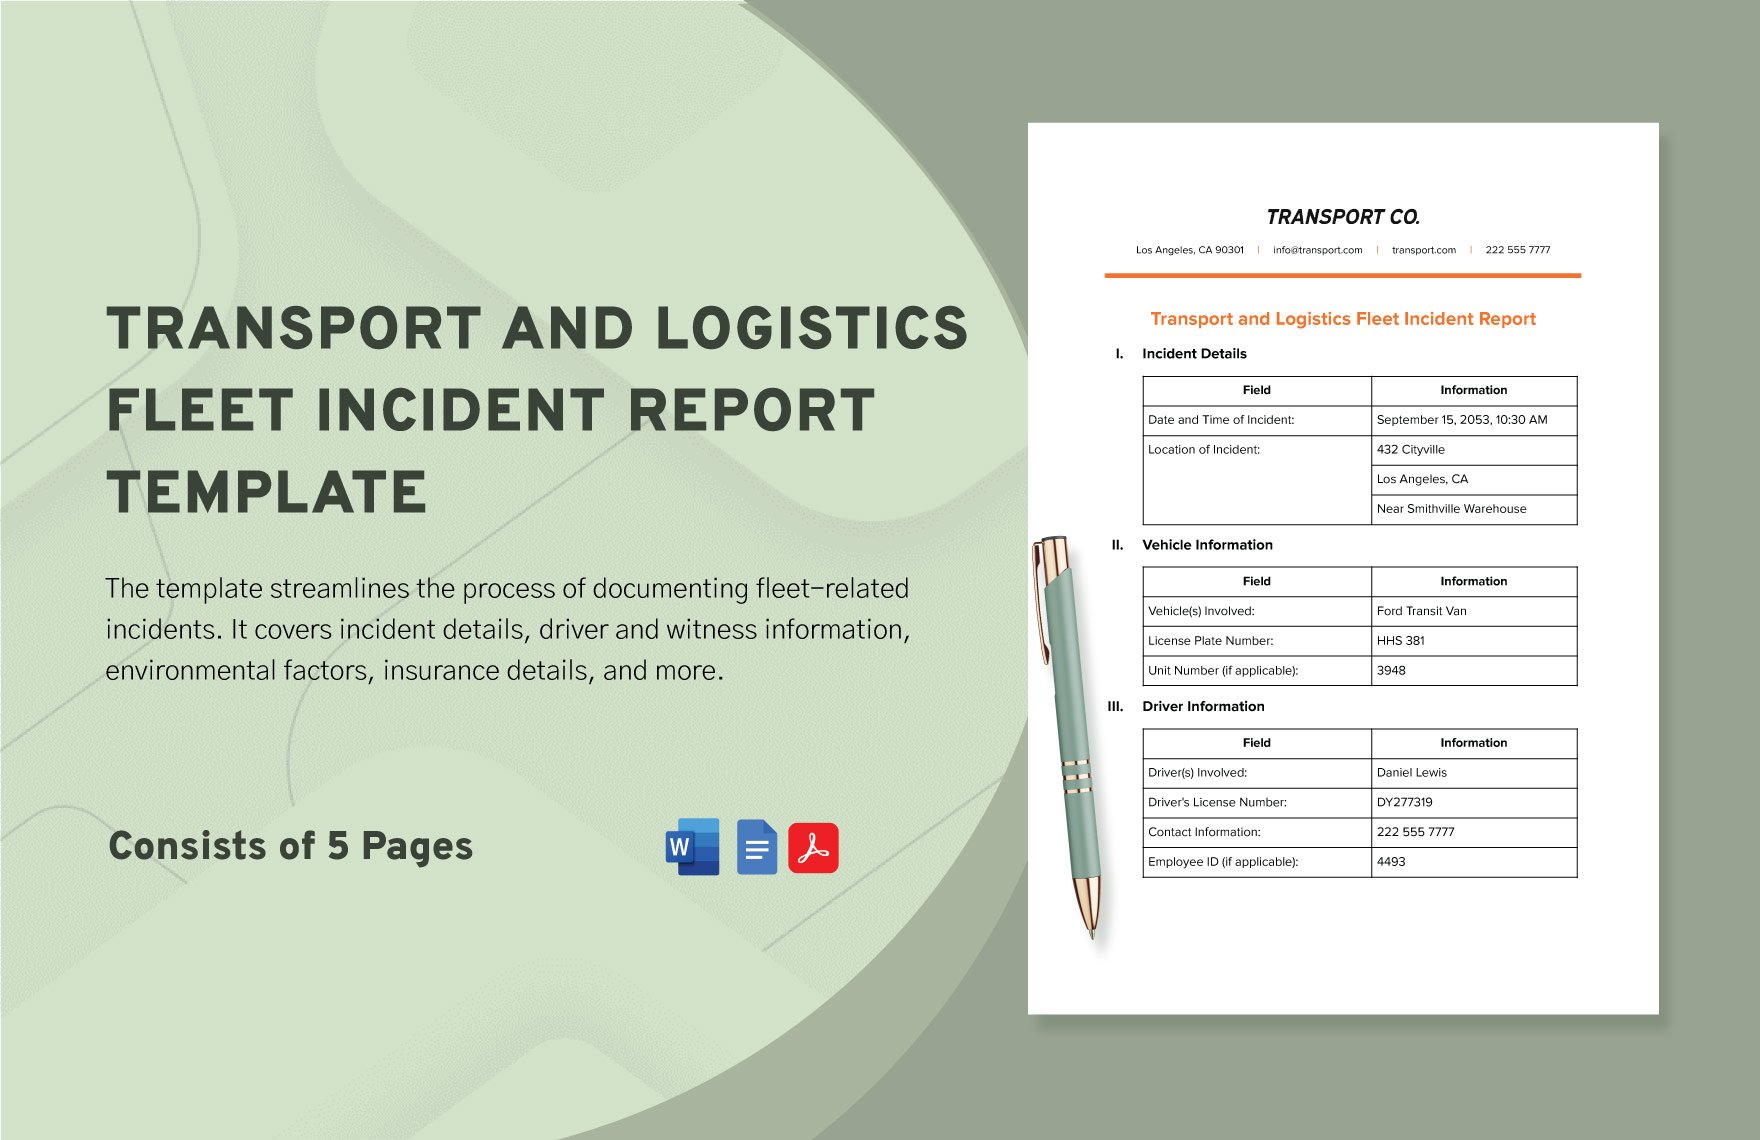 Transport and Logistics Fleet Incident Report Template